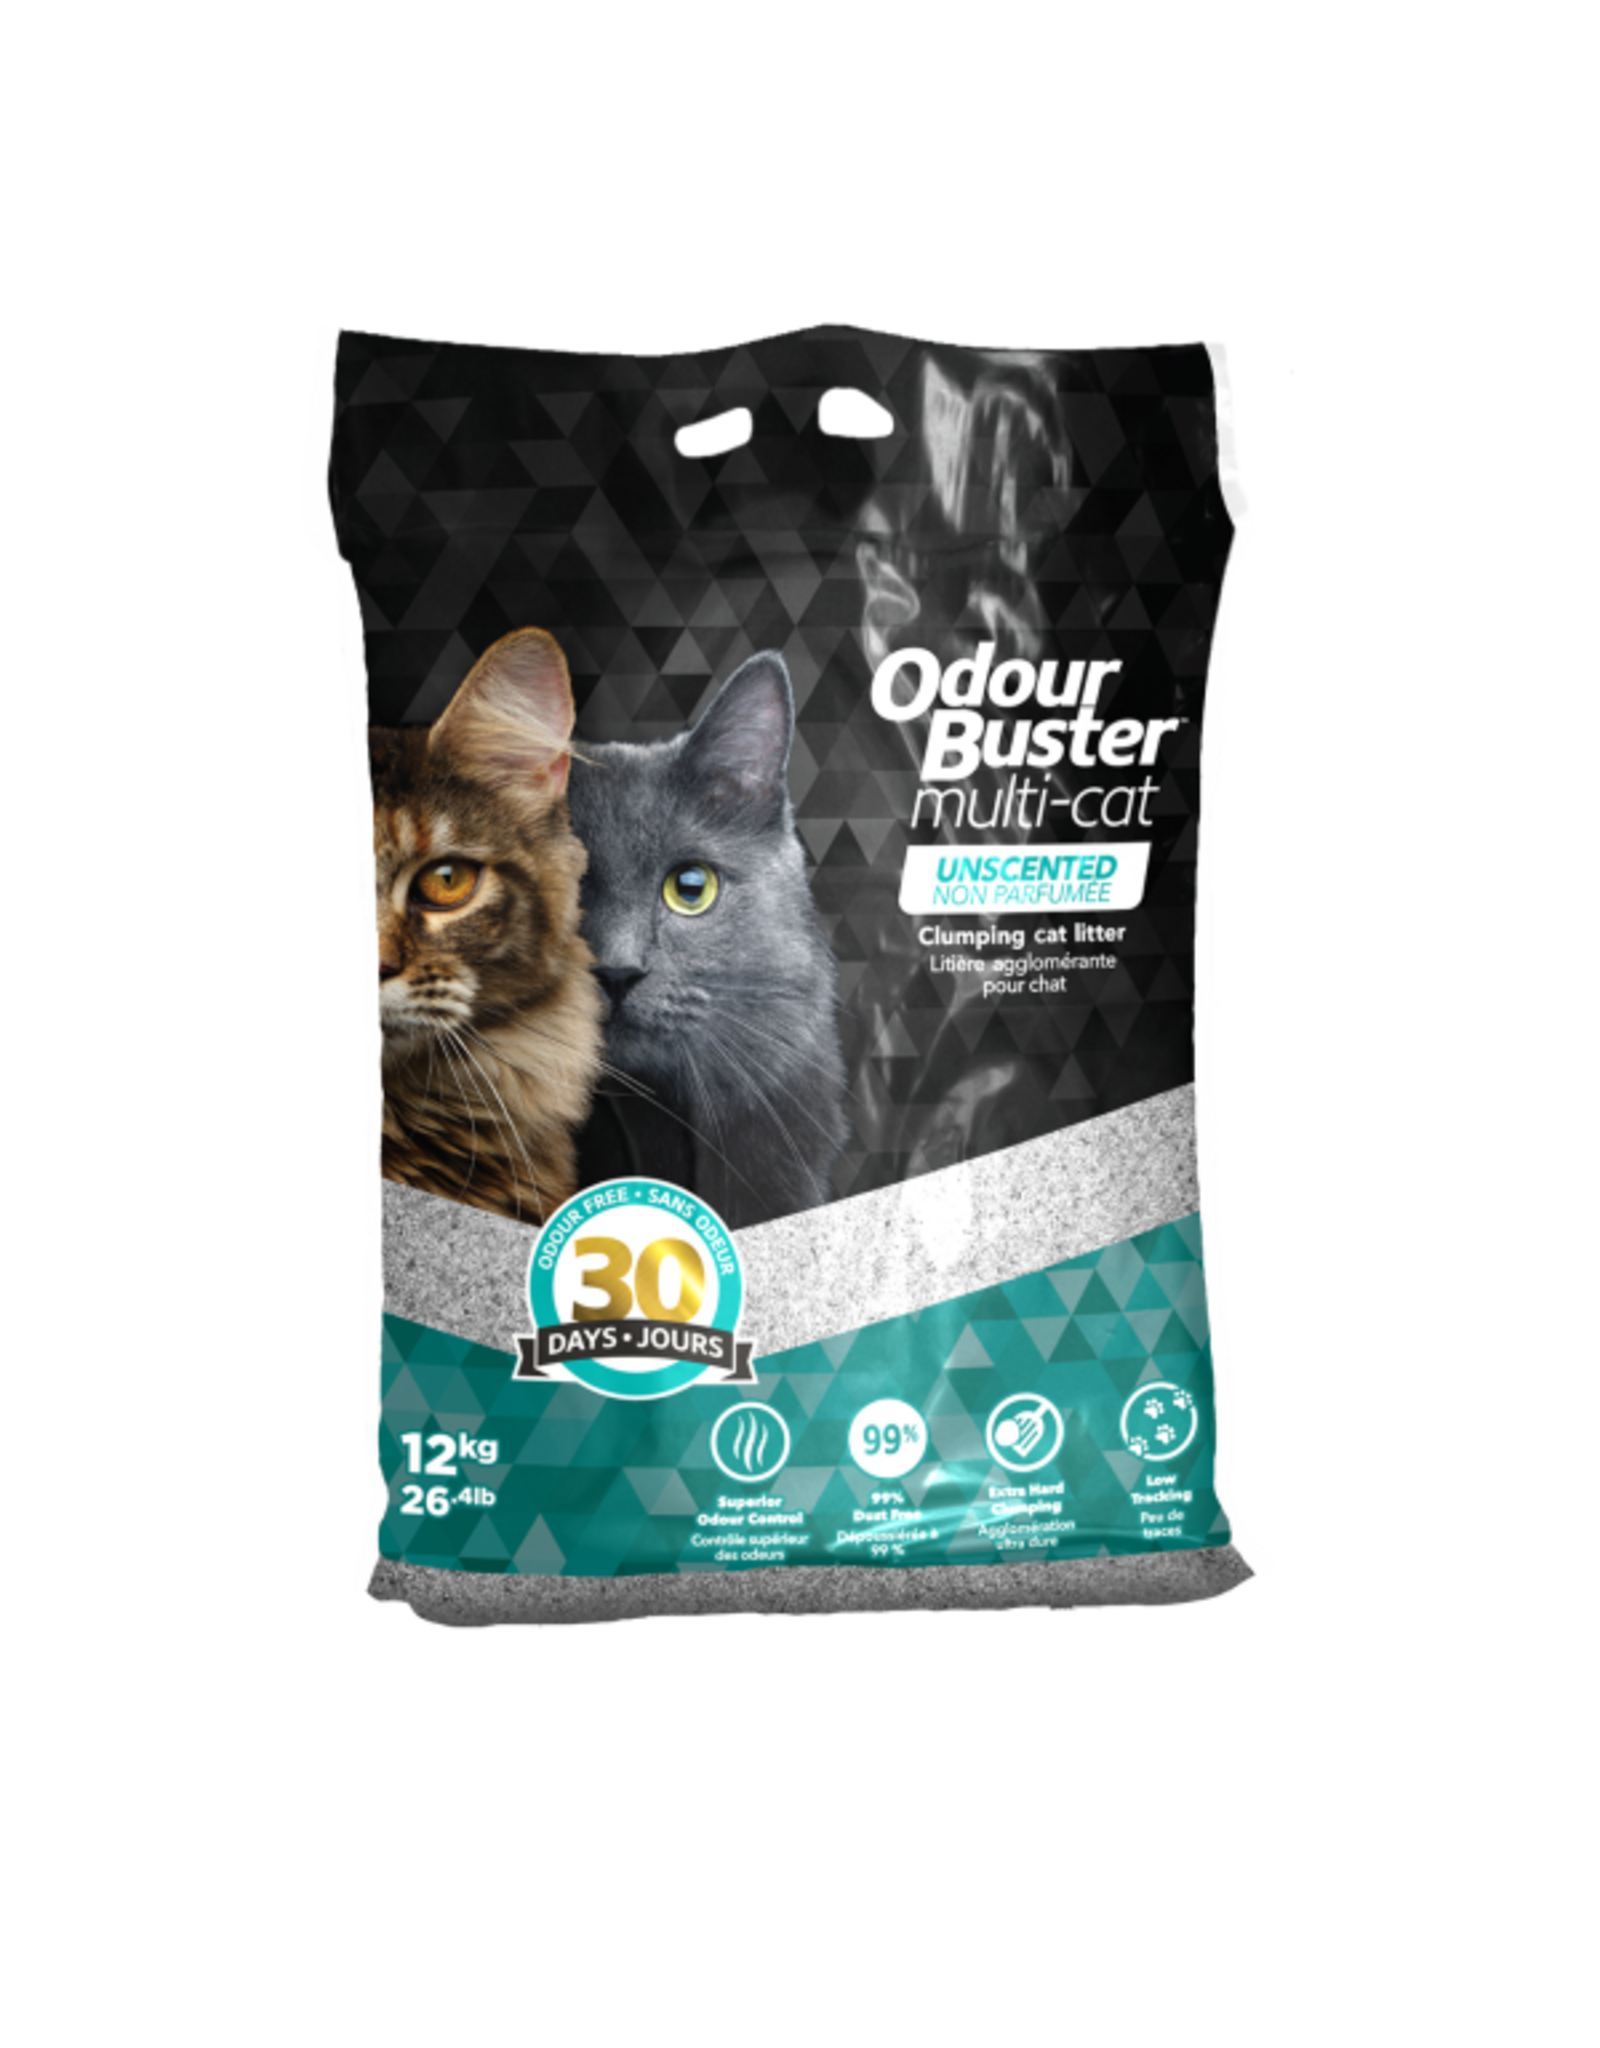 Odour Buster Odour Buster Multi-Cat Unscented Litter 12KG